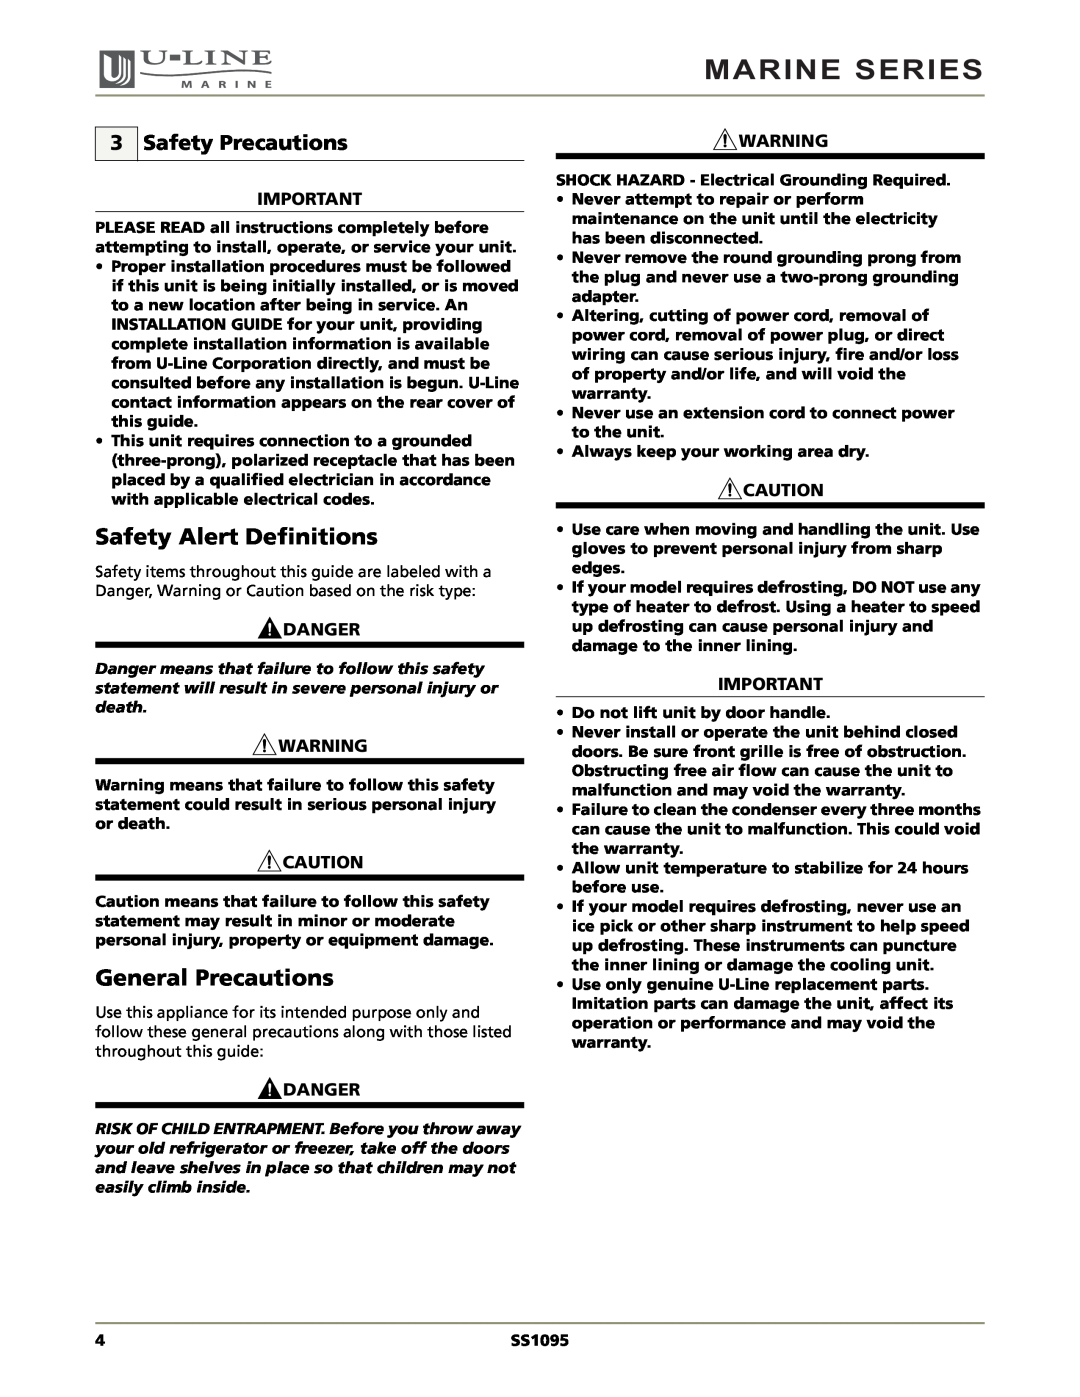 U-Line SS1095 manual Safety Alert Definitions, General Precautions, Safety Precautions, Marine Series, Danger 